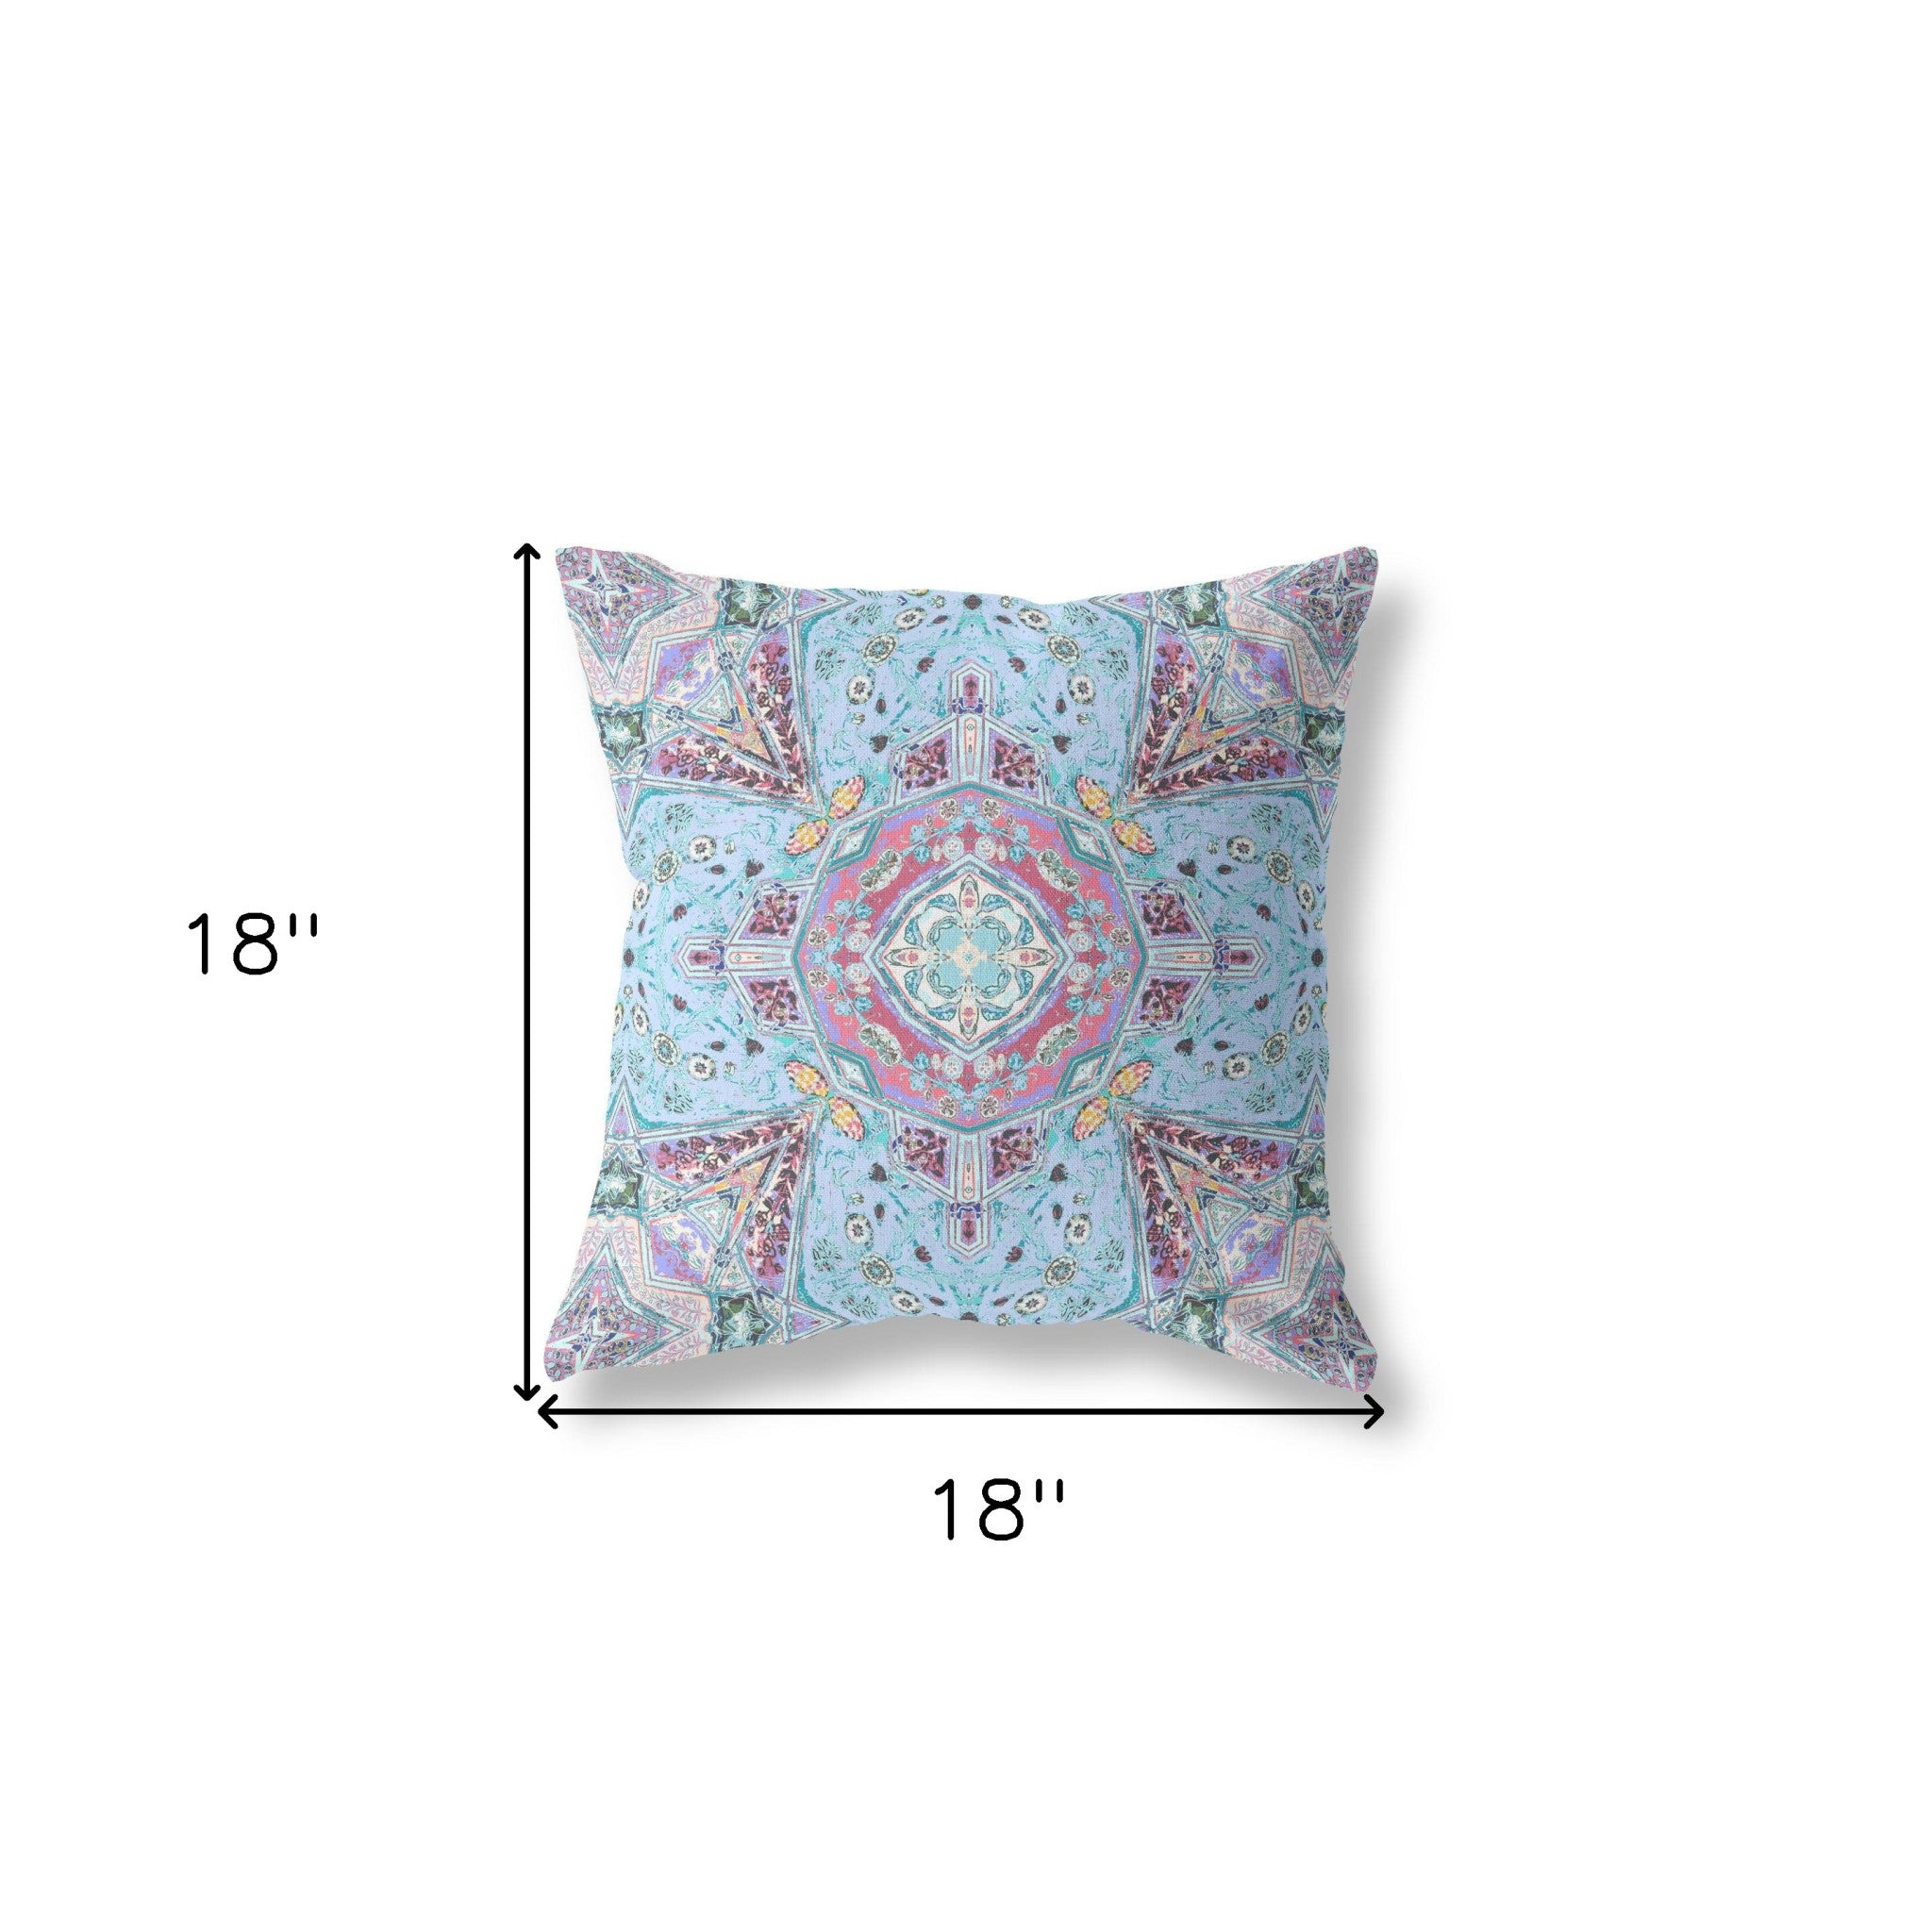 18" X 18" Magenta Zippered Geometric Indoor Outdoor Throw Pillow Cover & Insert